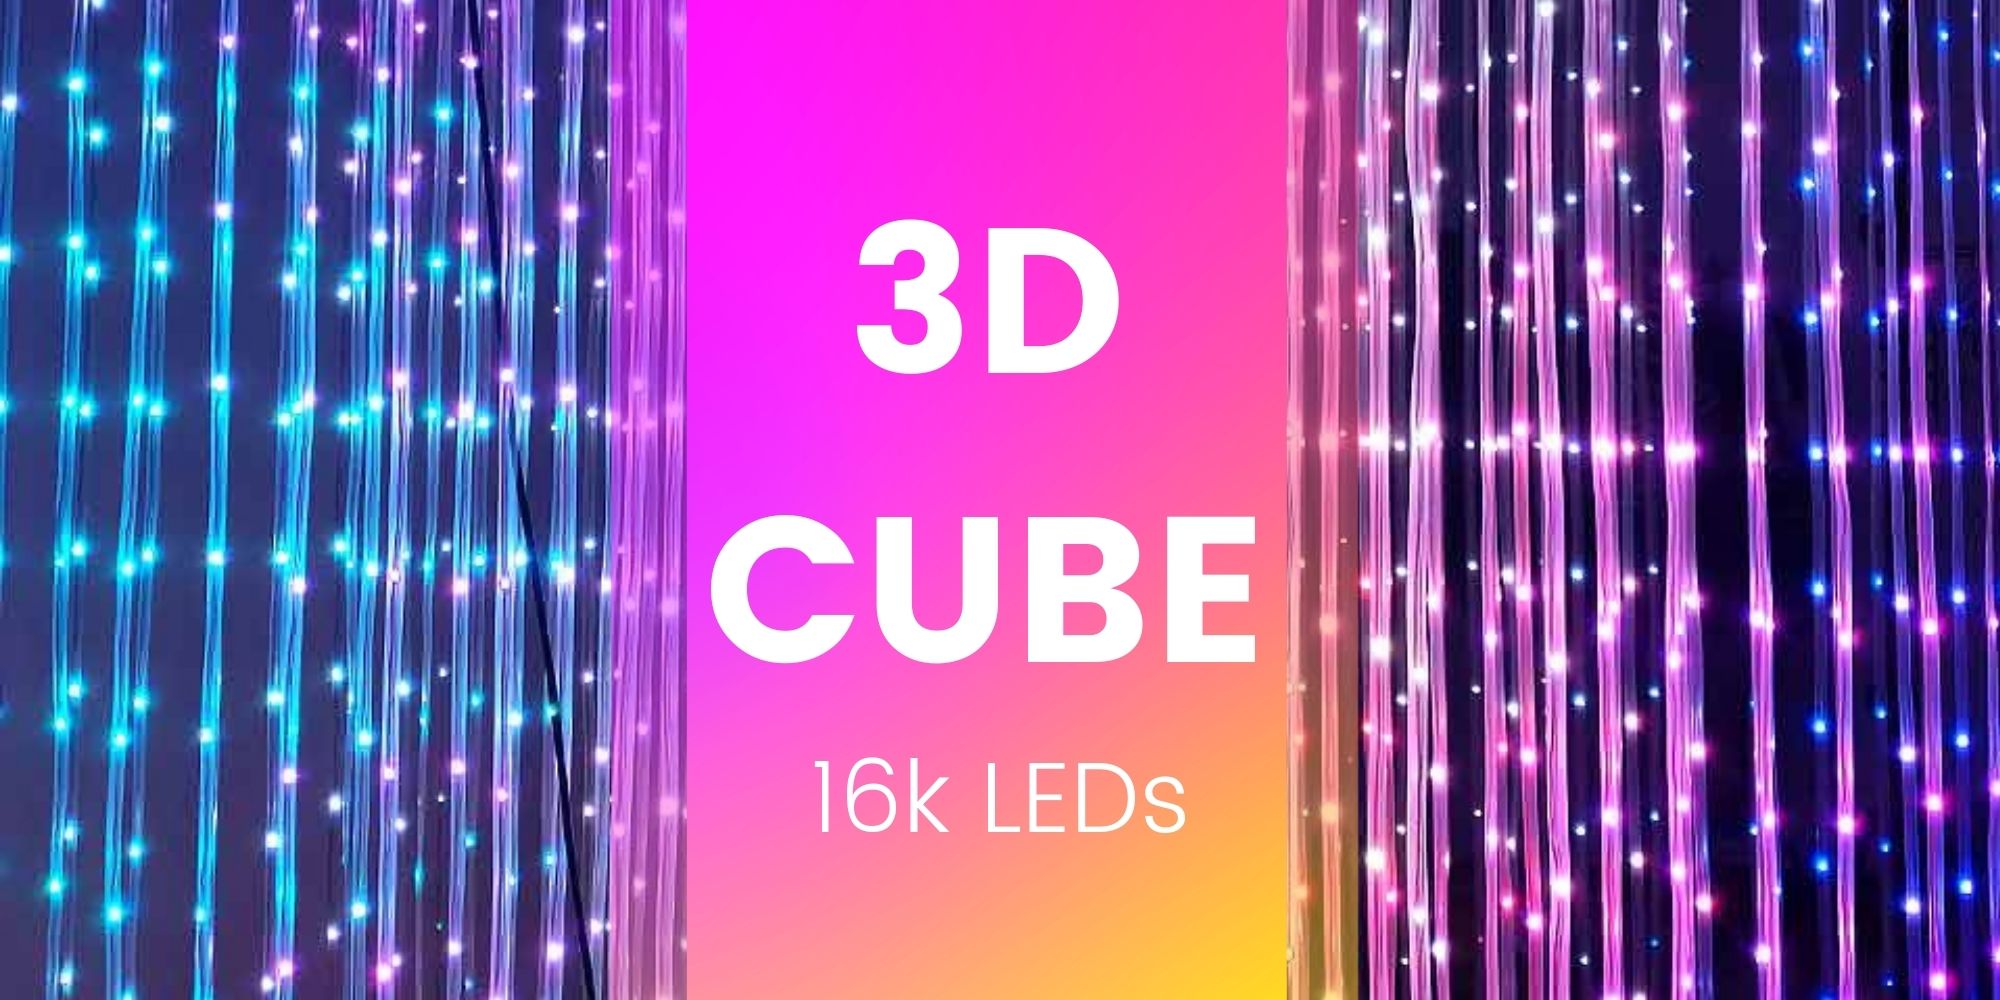 https://www.etereshop.com/wp-content/uploads/2021/02/3D-Cube-with-16k-LEDs.jpg